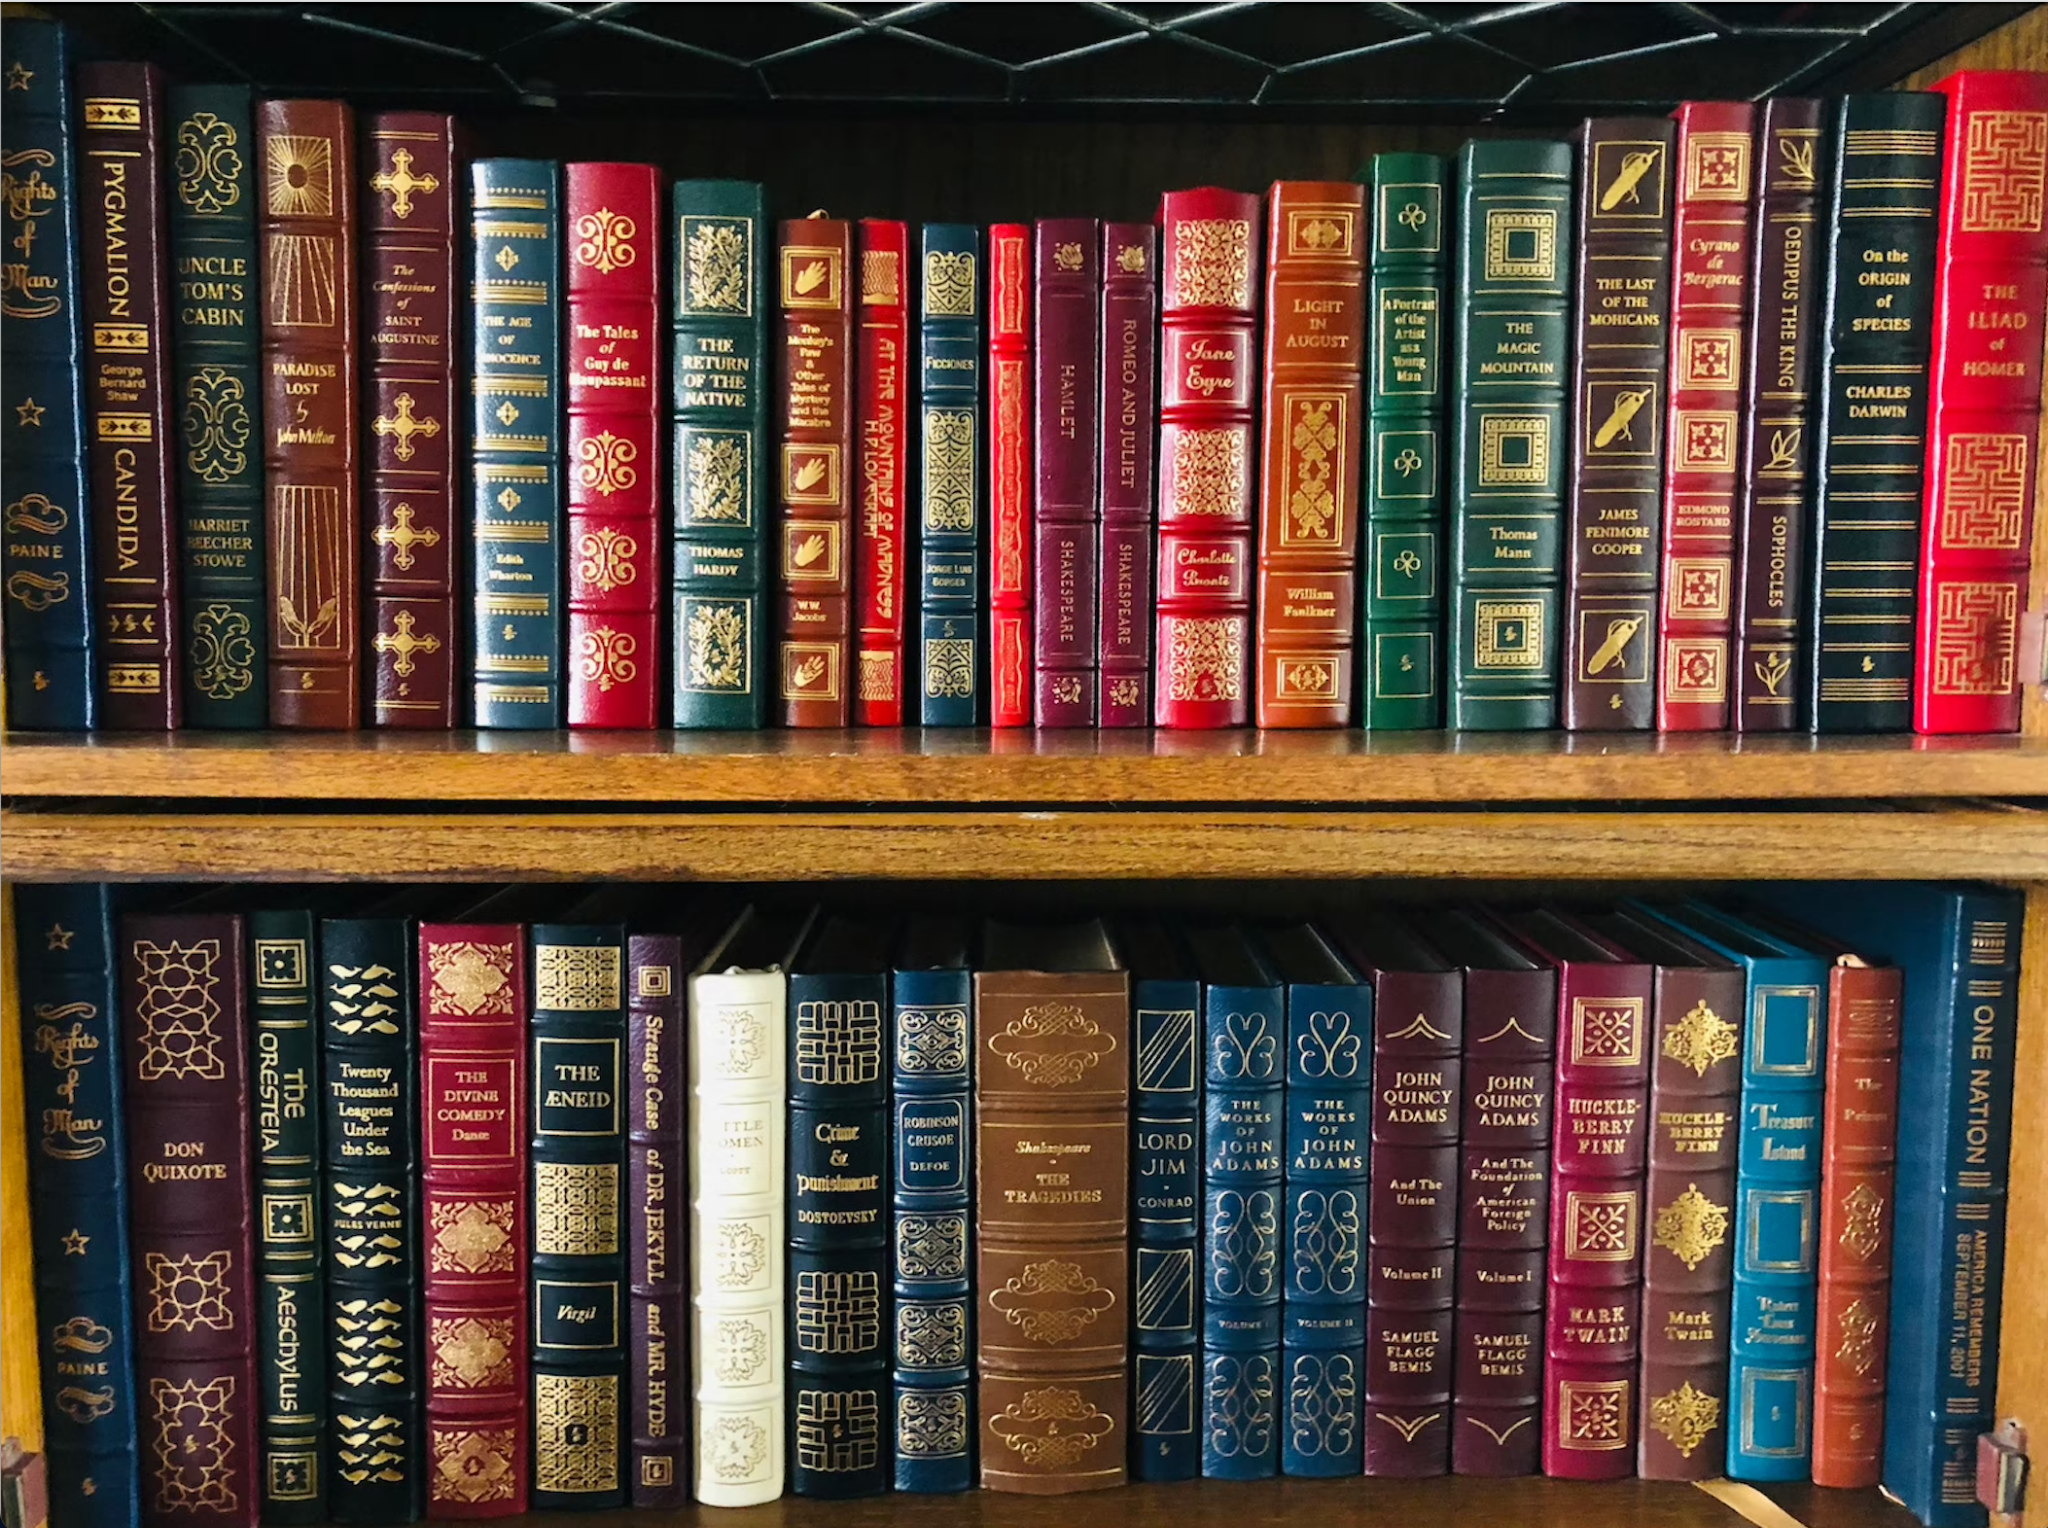  Set 3 - Easton Press & Franklin Library 100 Greatest Books Ever Written - Beautiful Leather Classics 